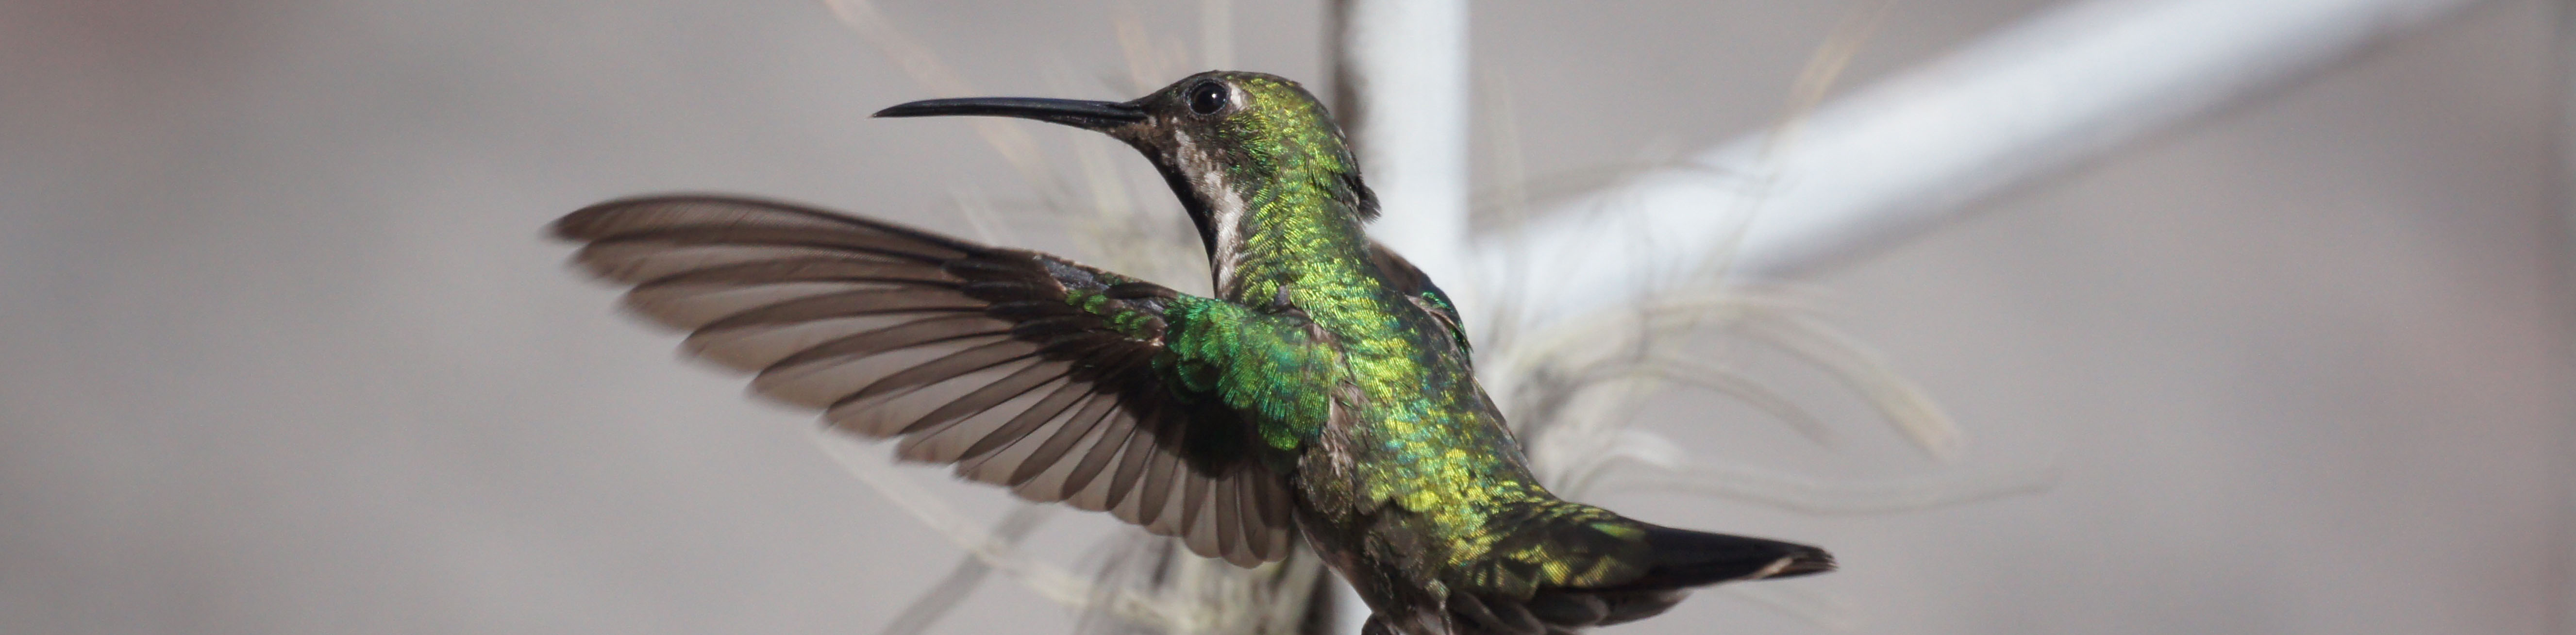 Hummingbird Image :)